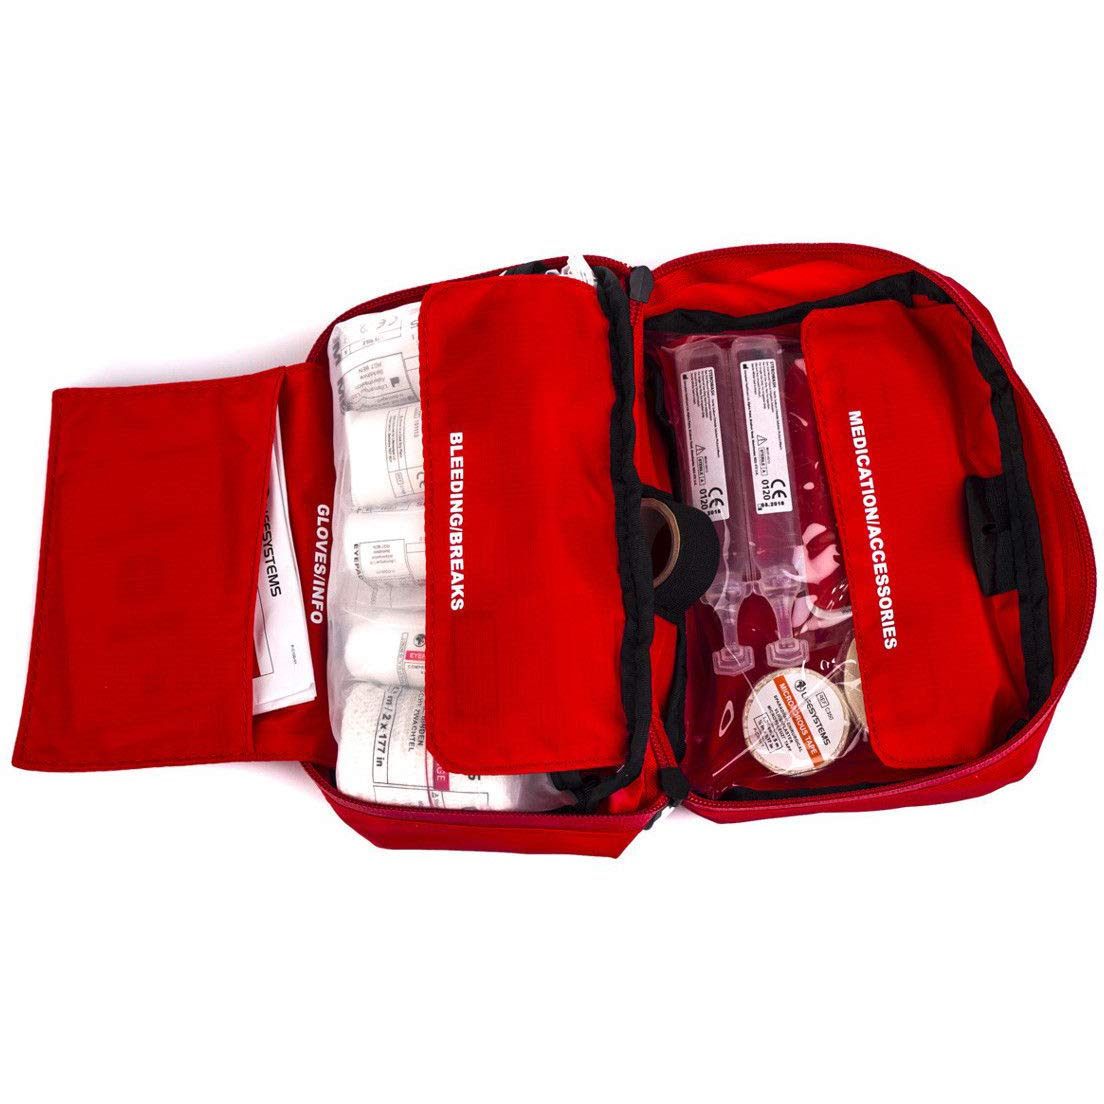 Apteczka LifeSystems Camping First Aid Kit